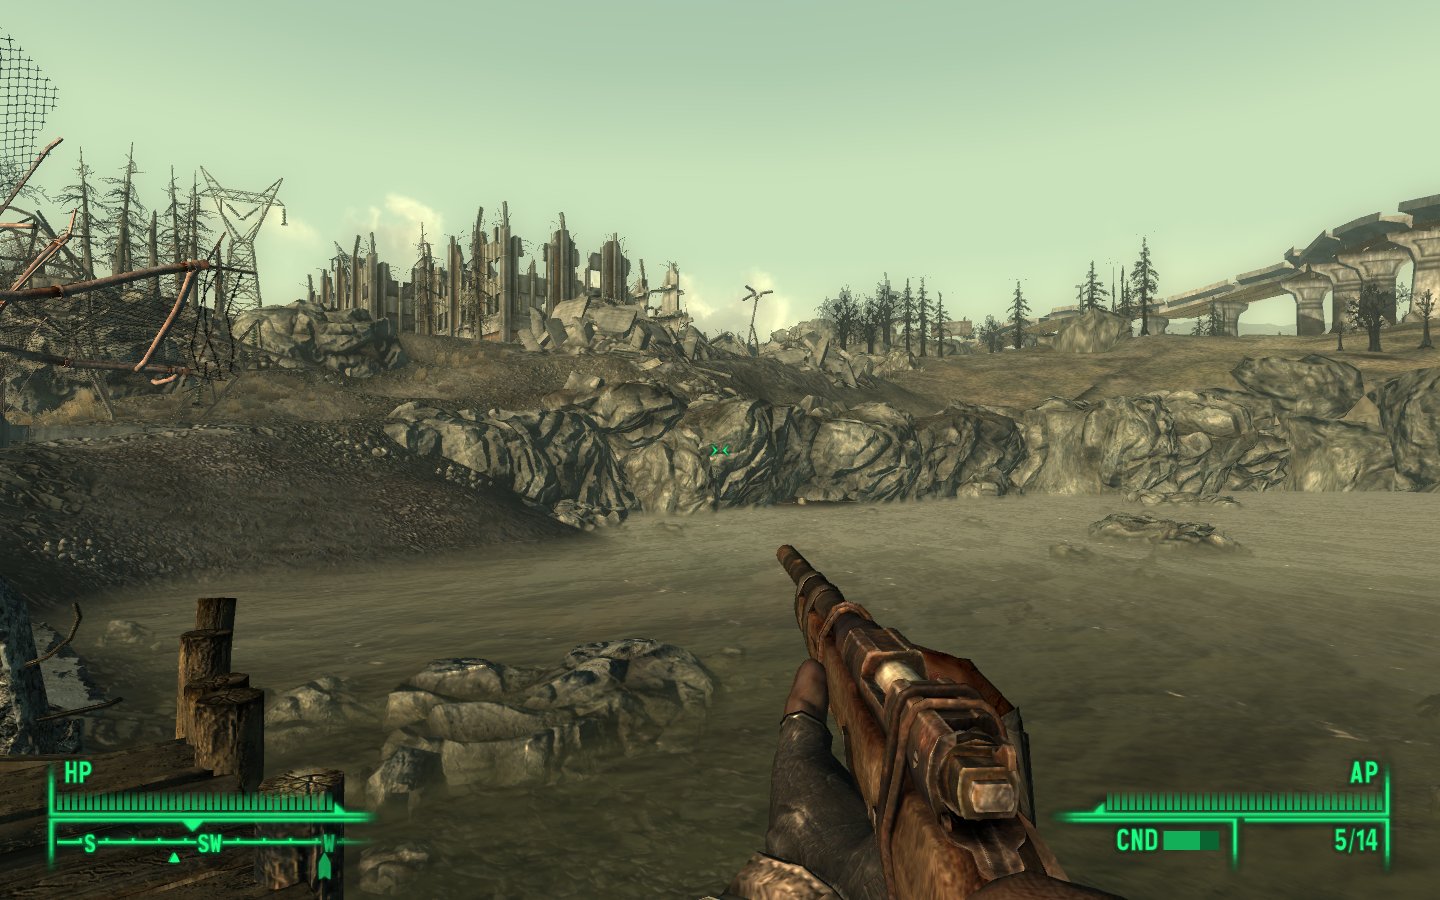 Версия fallout 3. Игра Fallout 3. Fallout 3 Wasteland Edition. Fallout 3 системные требования. Фоллаут 3 ремастер.